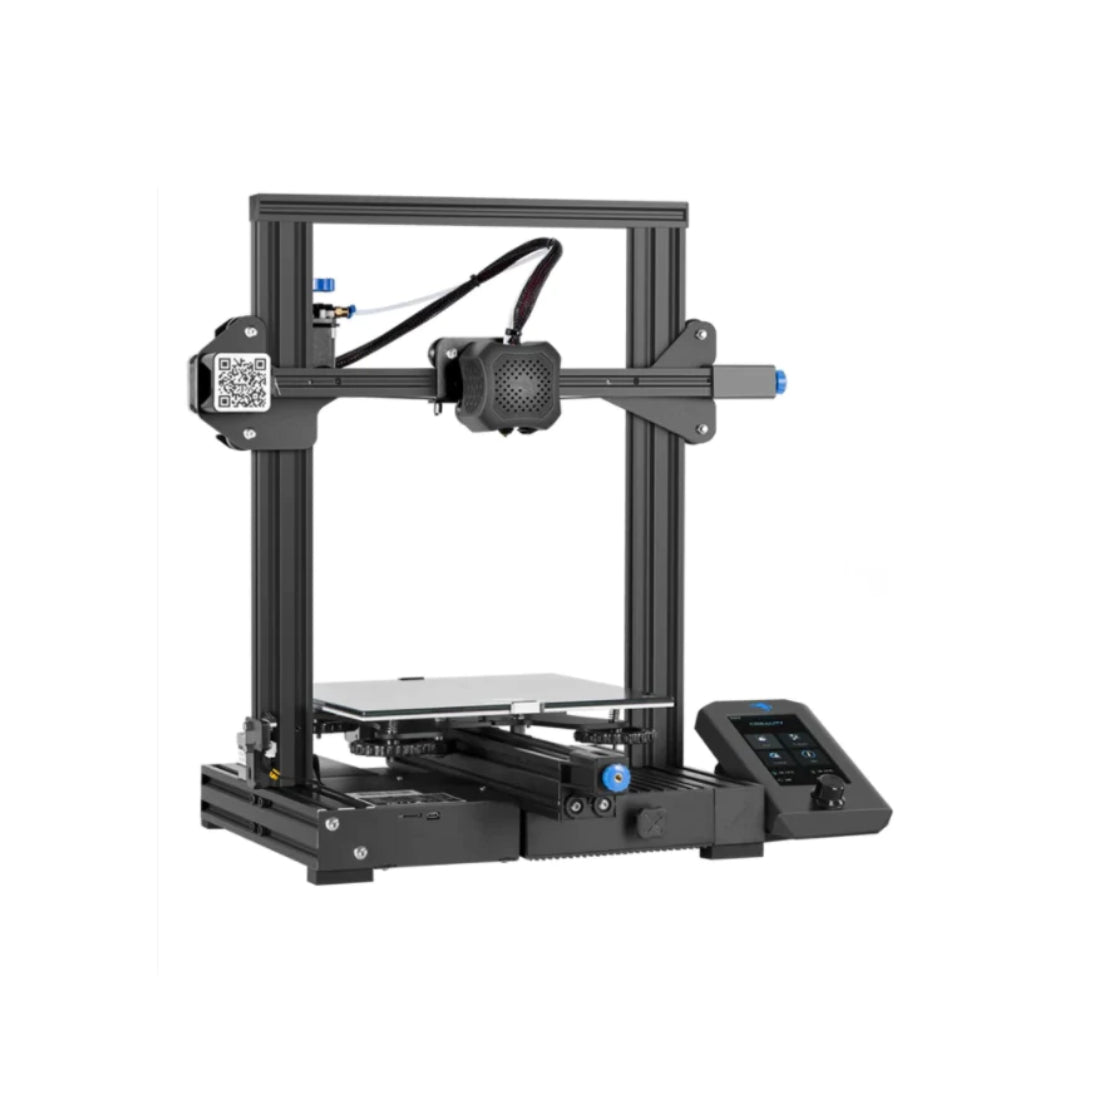 Voltaat Creality Ender 3 V2 - 3D Printer - طابعة - Store 974 | ستور ٩٧٤